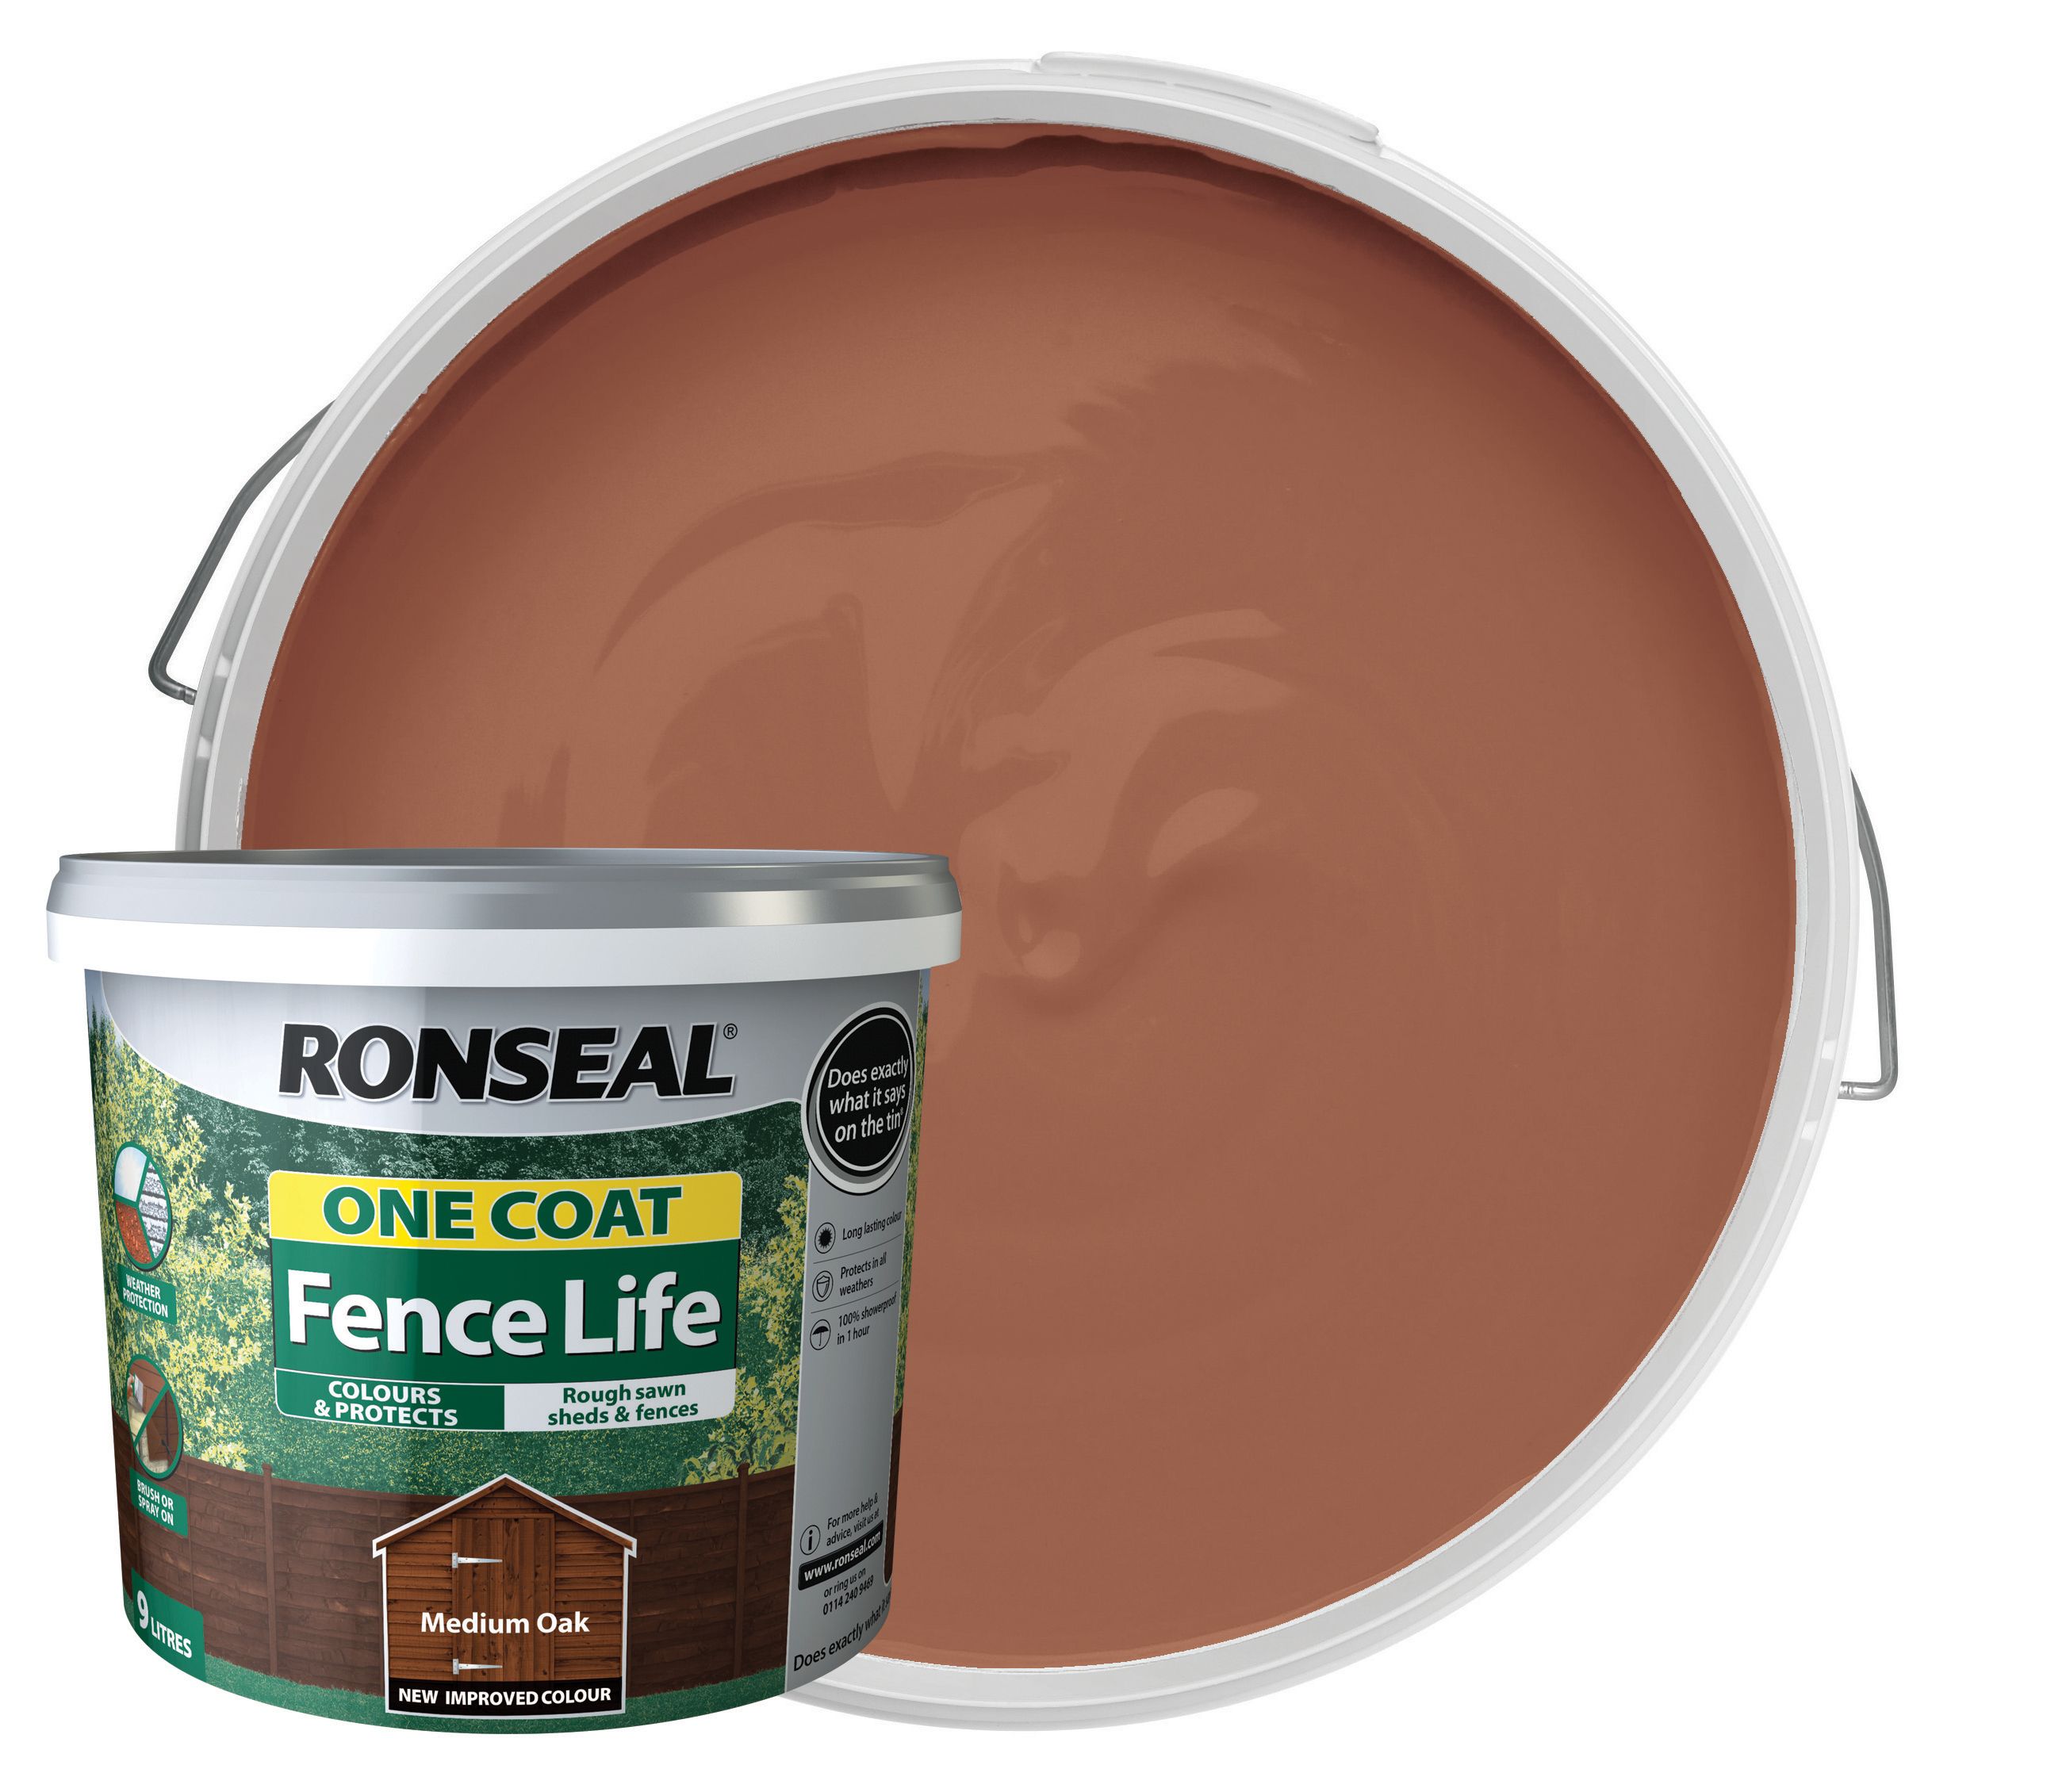 Ronseal One Coat Fence Life Matt Shed & Fence Treatment - Medium Oak 9L